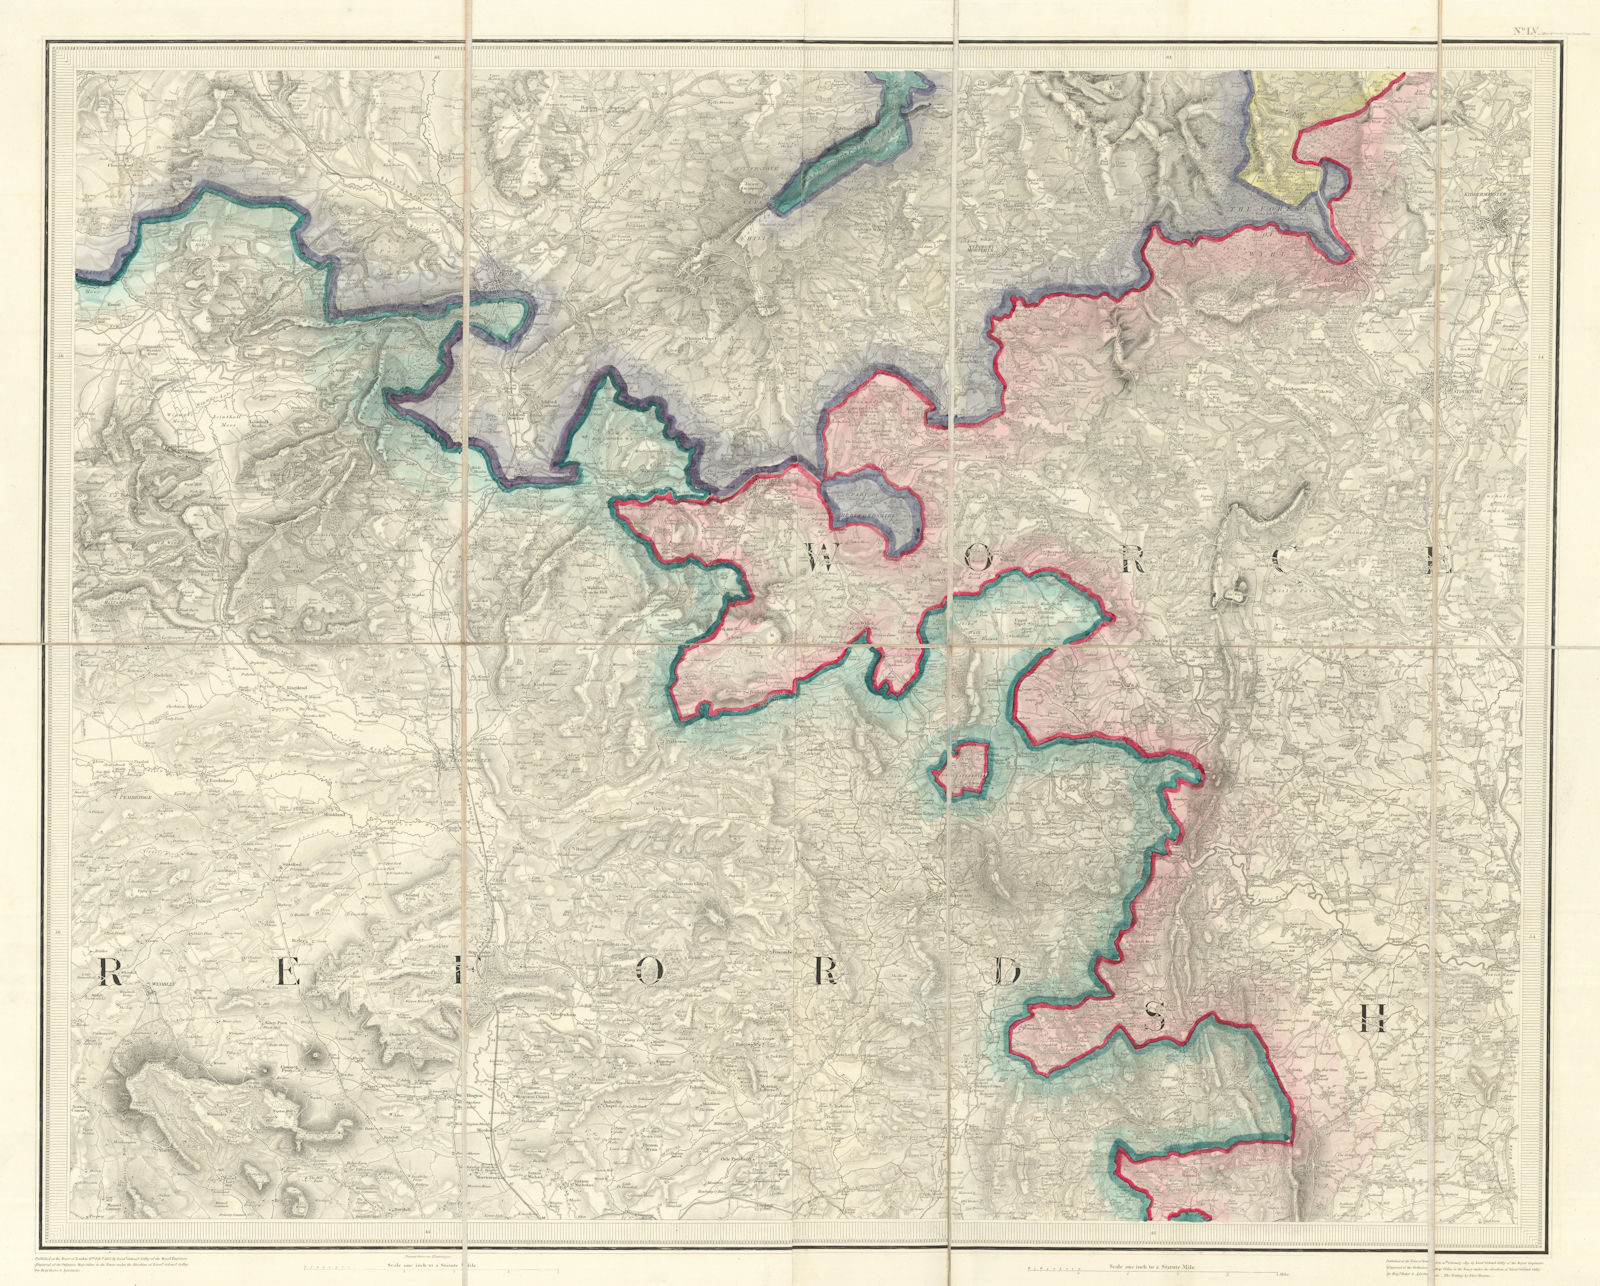 OS #55 Teme Valley & NE Herefordshire. Ludlow Stourport Leominster 1832 map